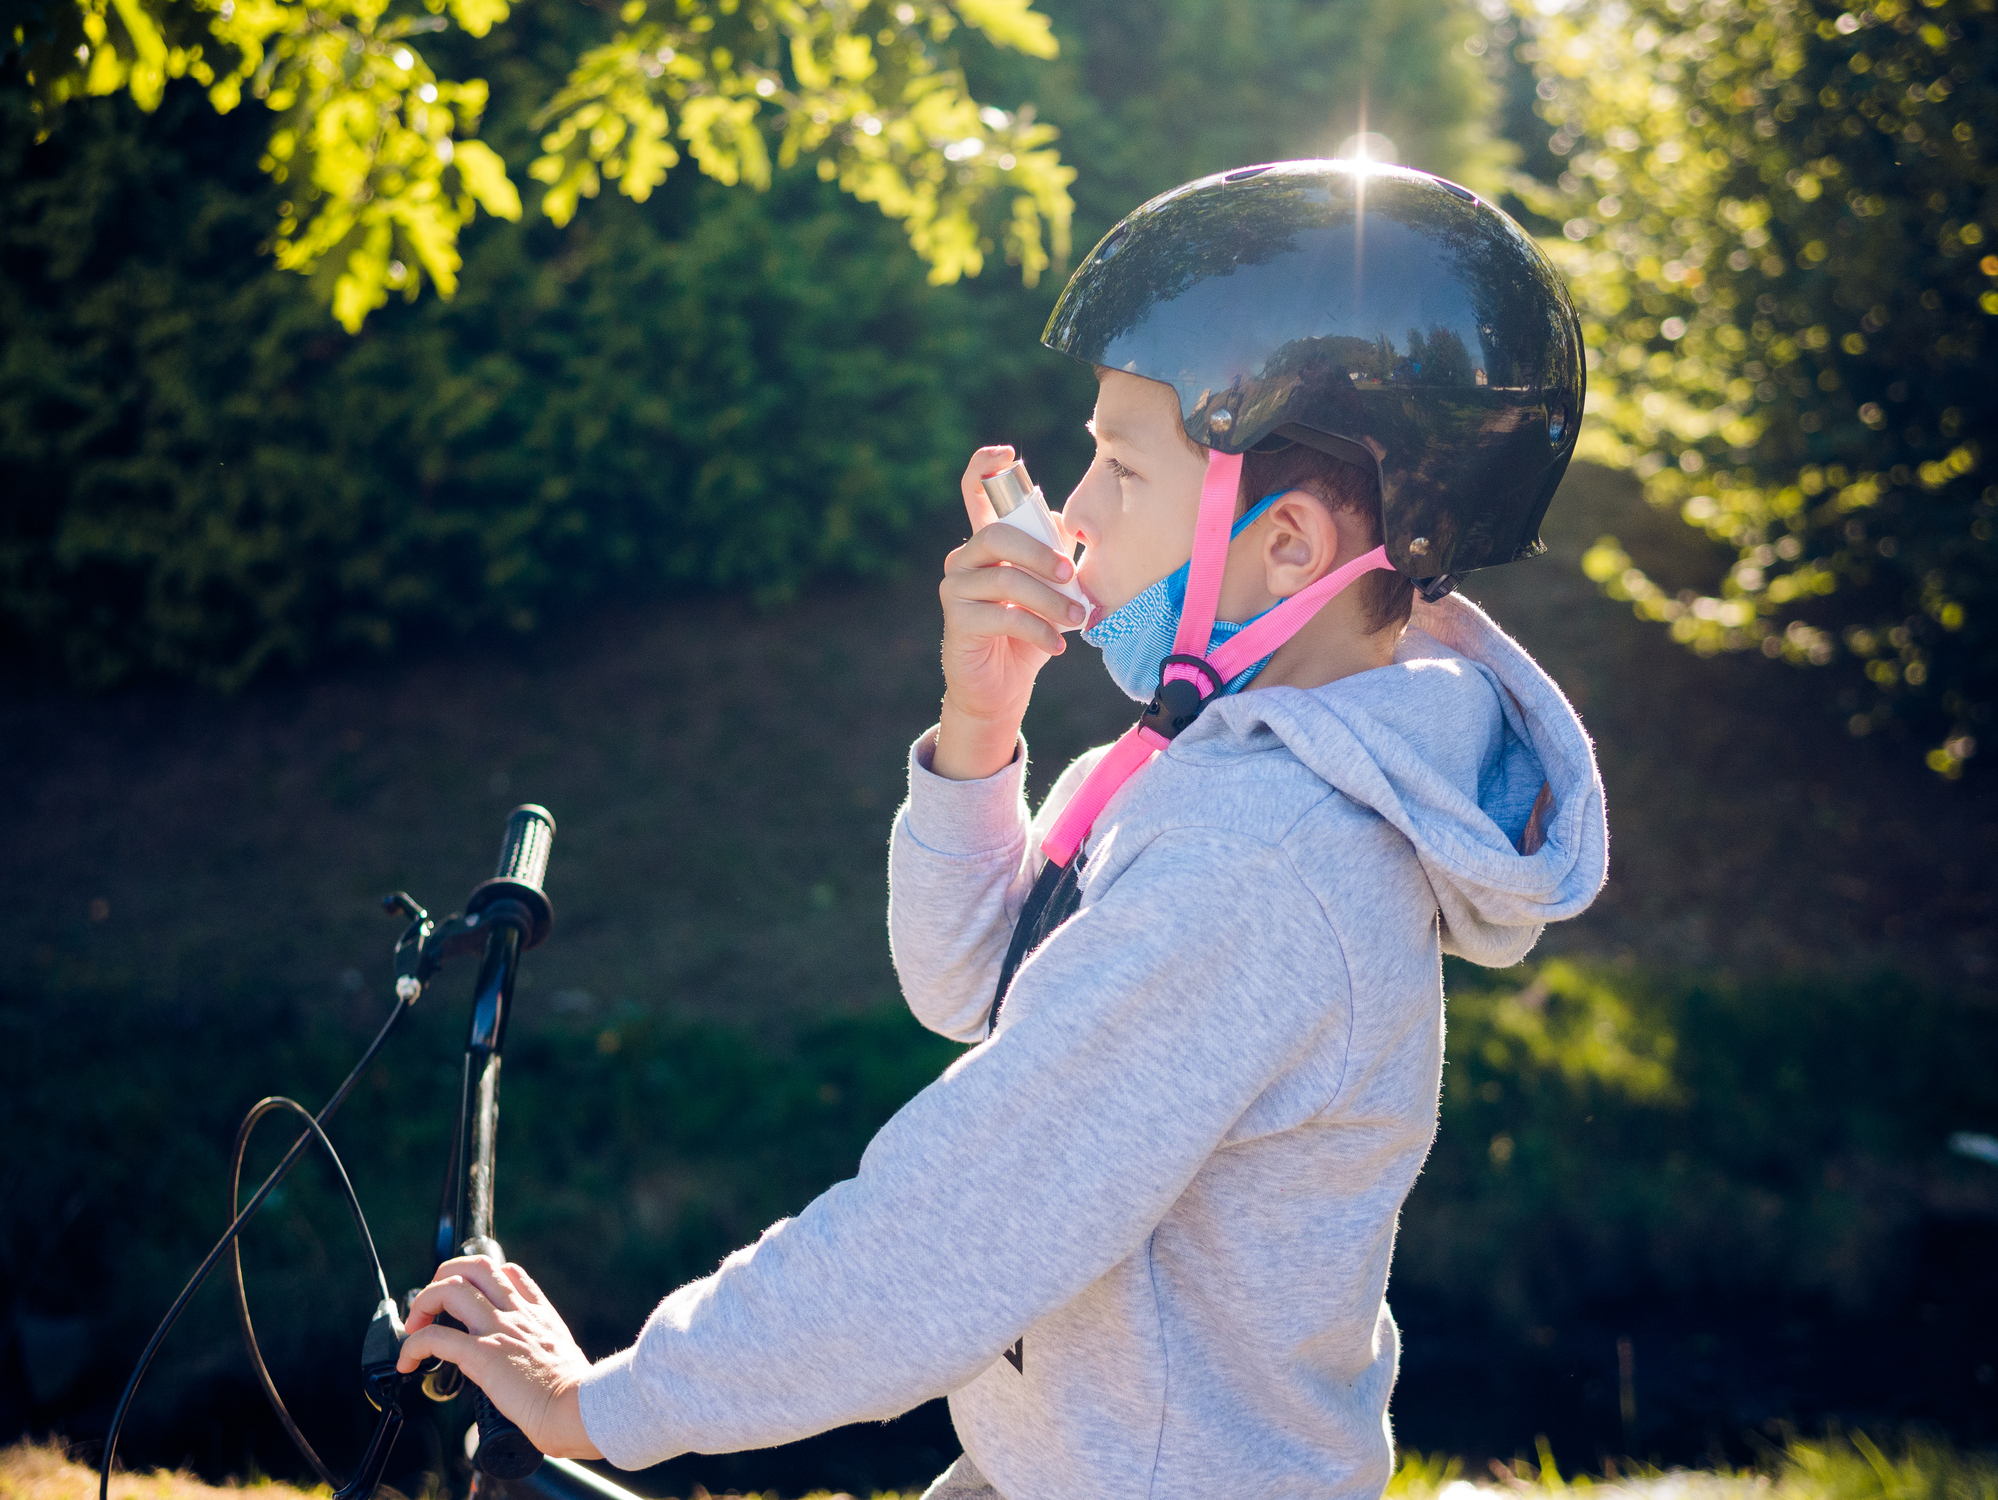 Young boy using an inhalator outdoors